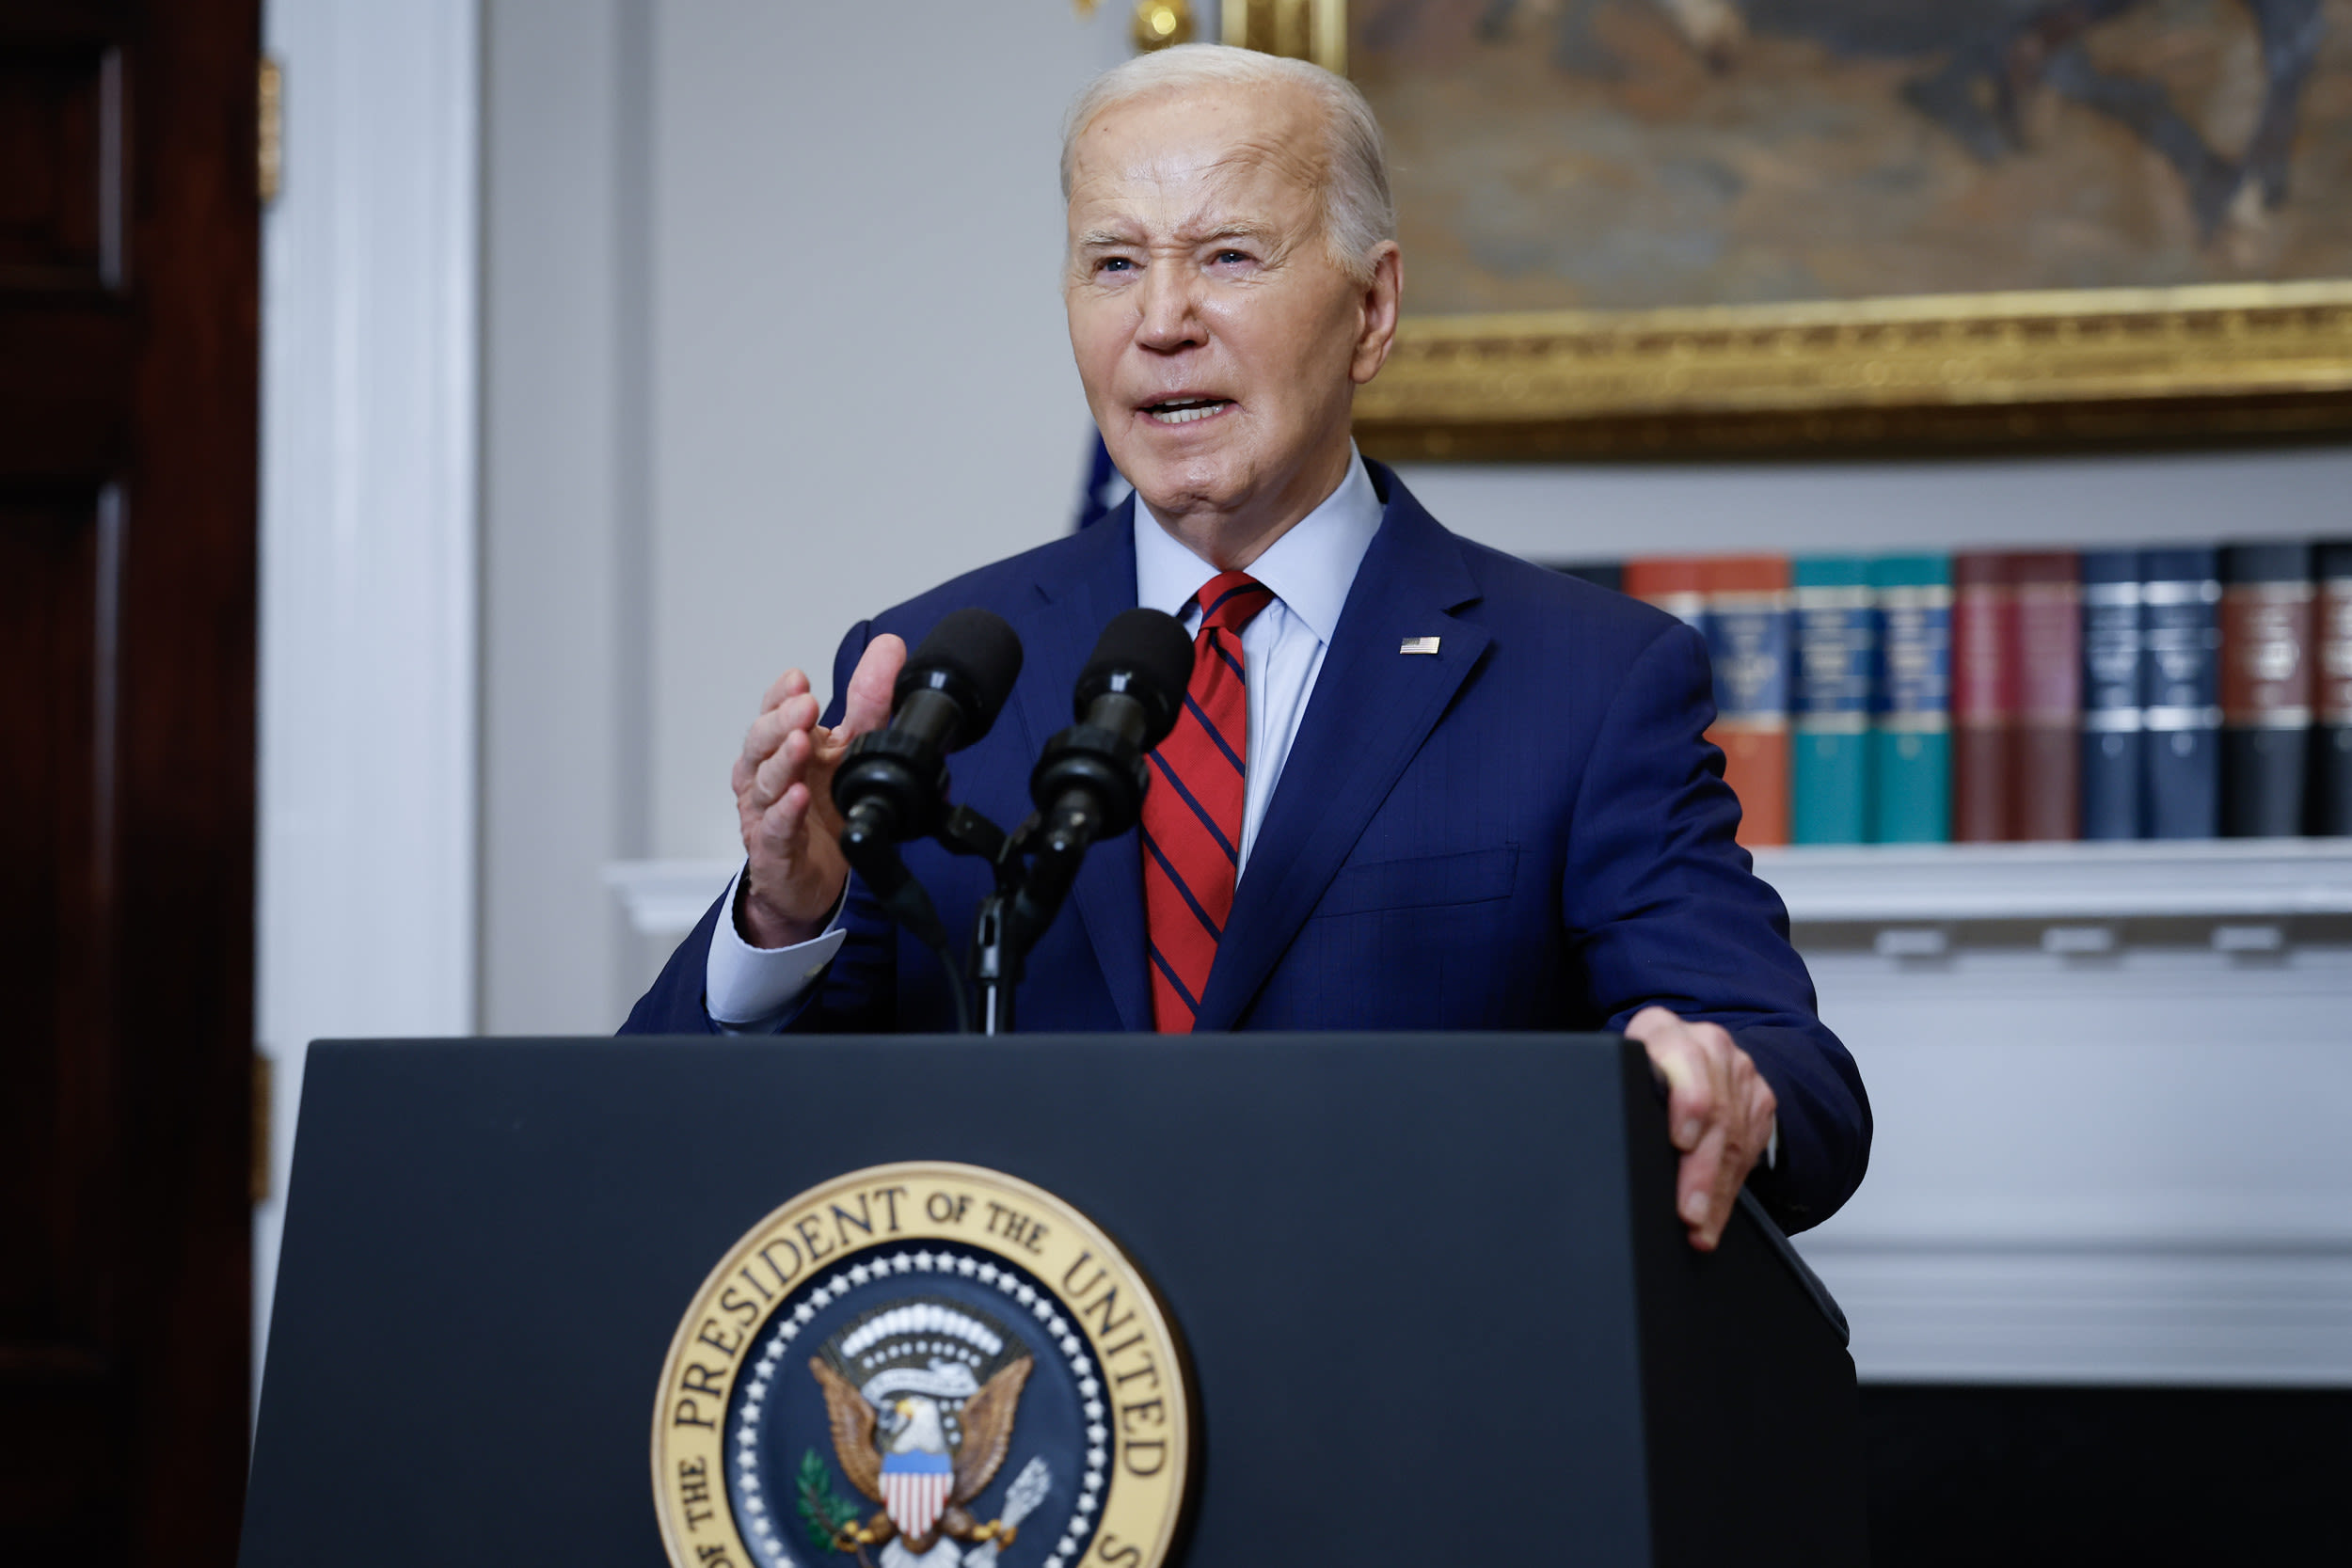 Joe Biden expands health insurance coverage for over 100,000 migrants